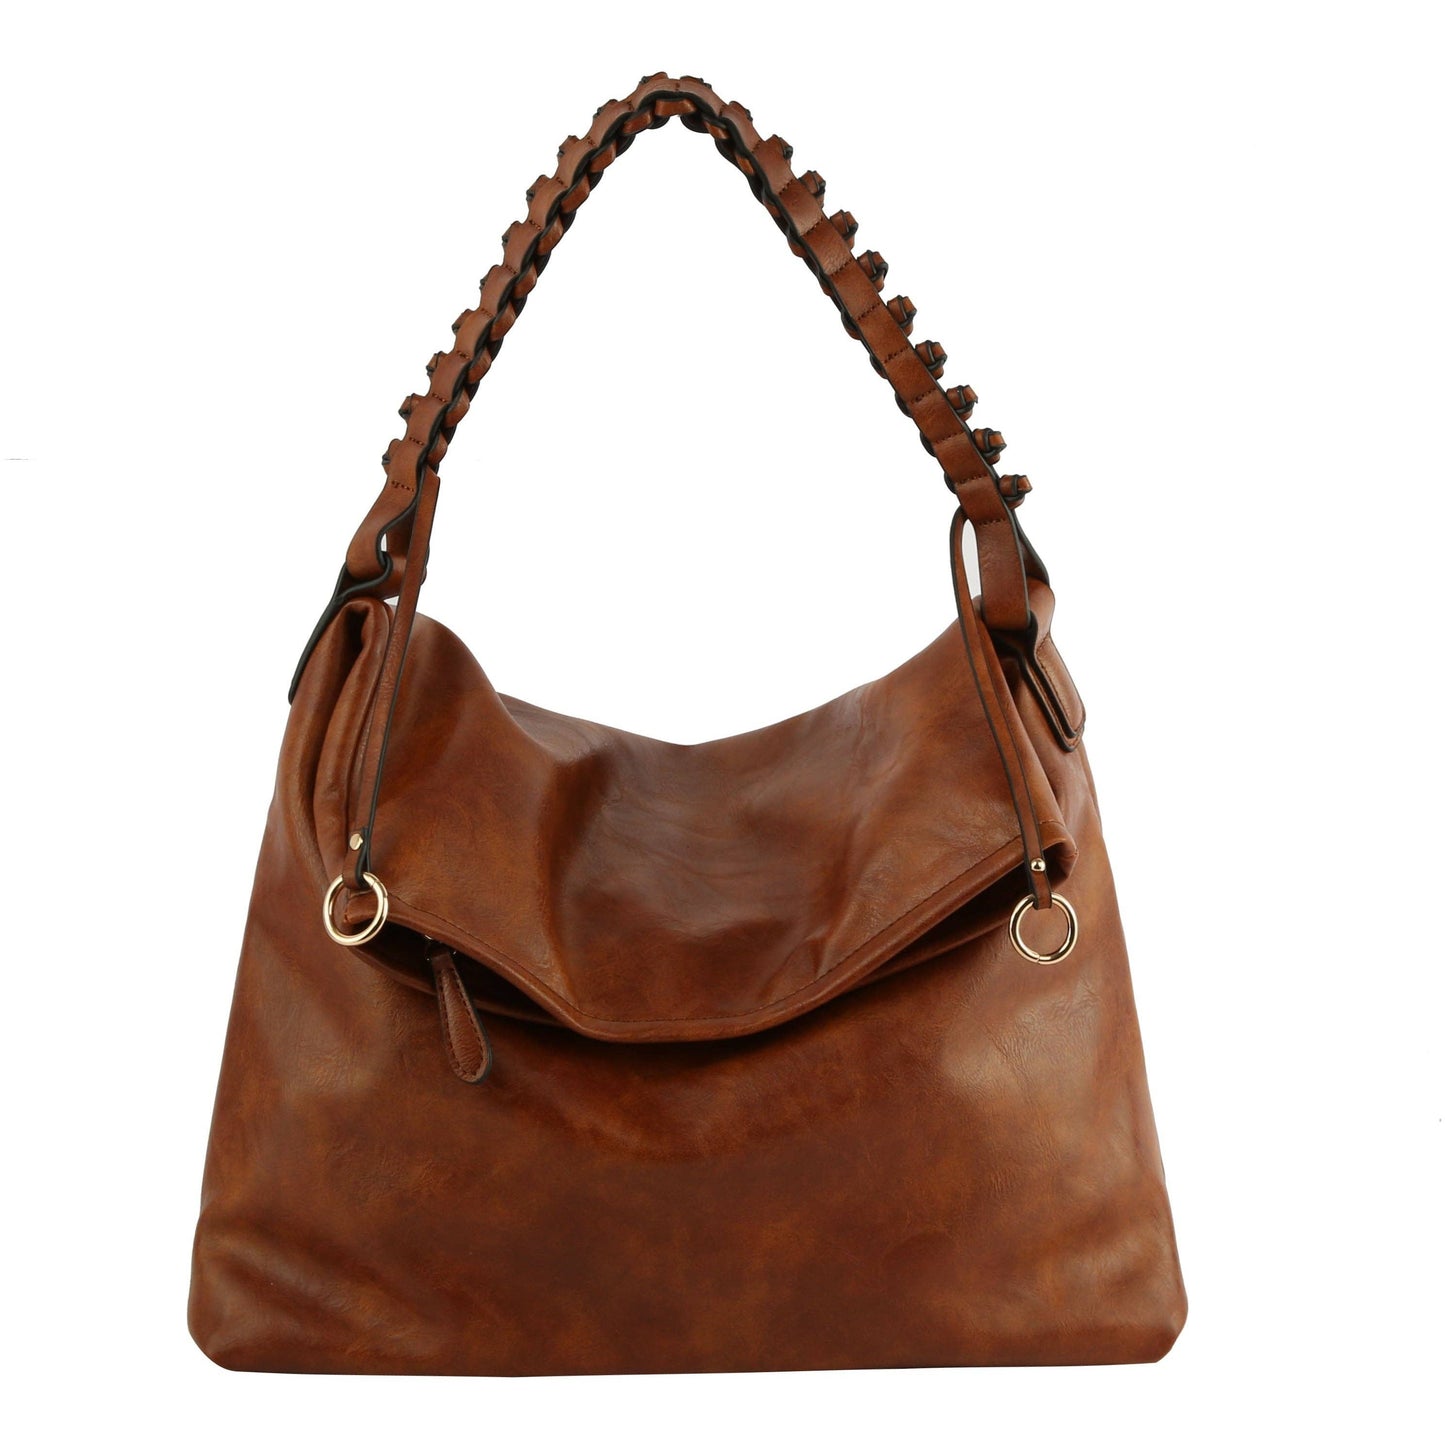 Handbags for Women Large Designer Ladies Hobo bag Bucket Purse